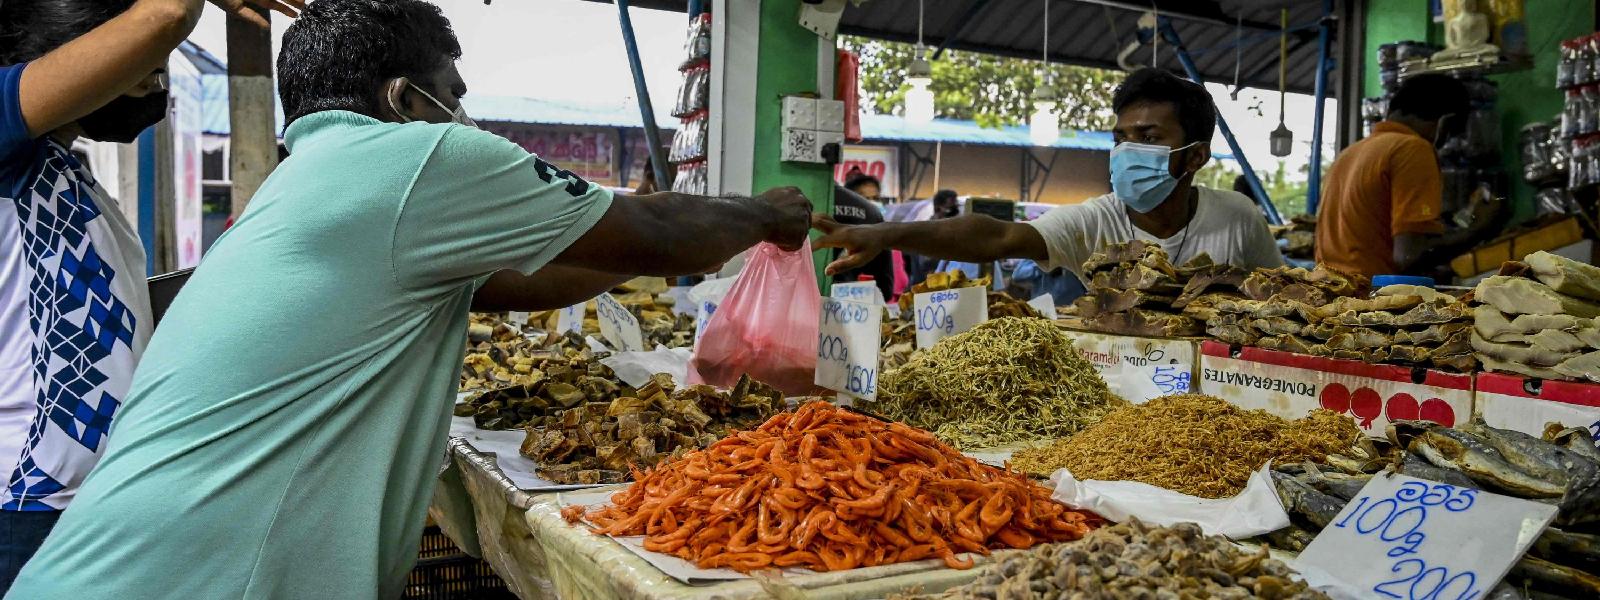 80% of Sri Lankan families eating less or cheap food